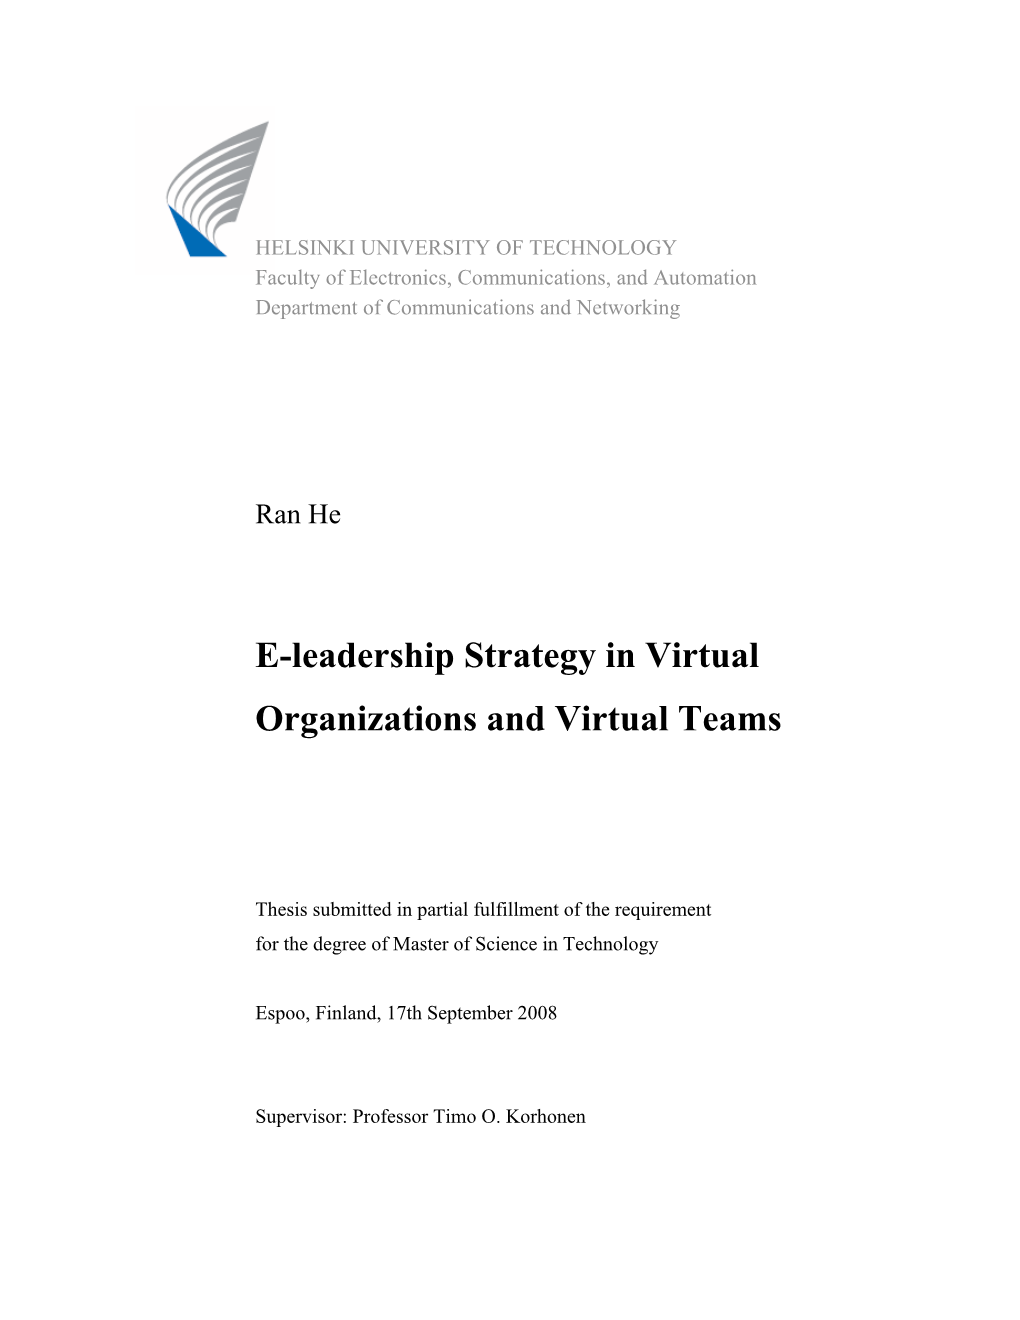 E-Leadership Strategy in Virtual Organizations and Virtual Teams